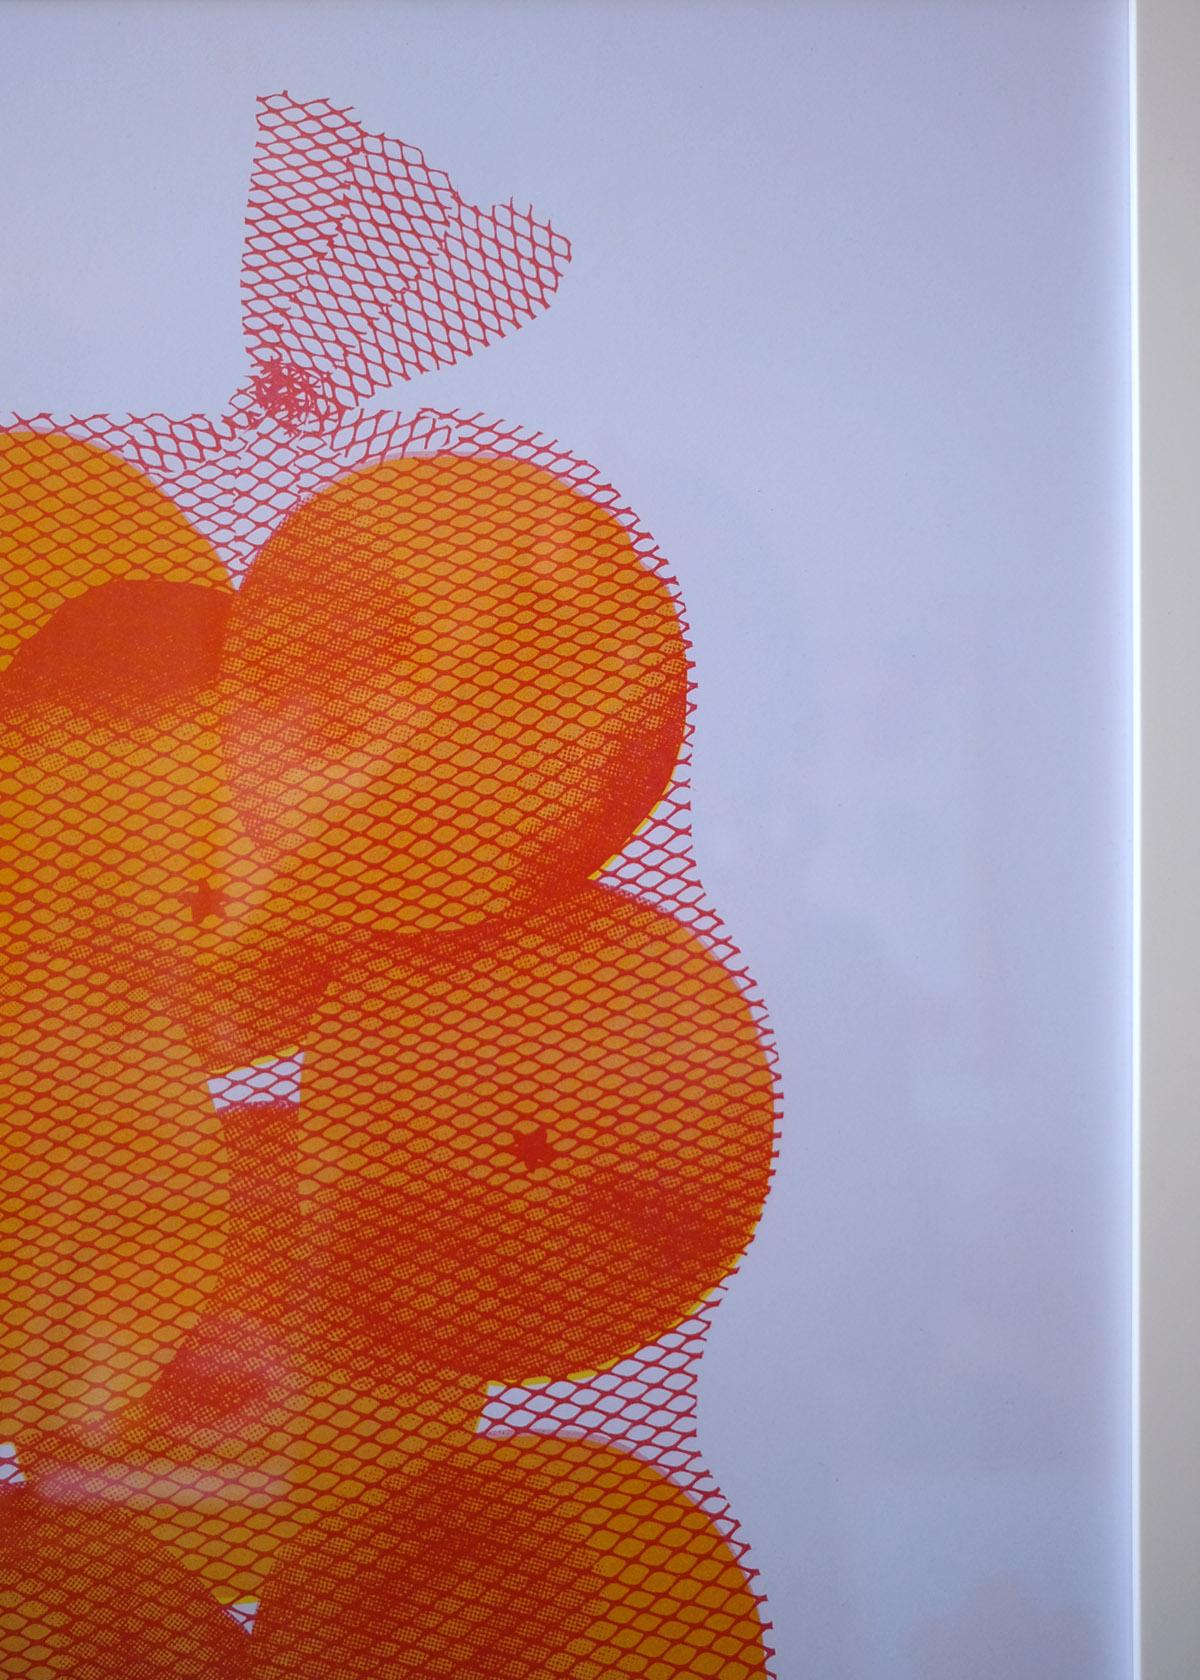 Bag of Valencia Oranges Risograph Print 2